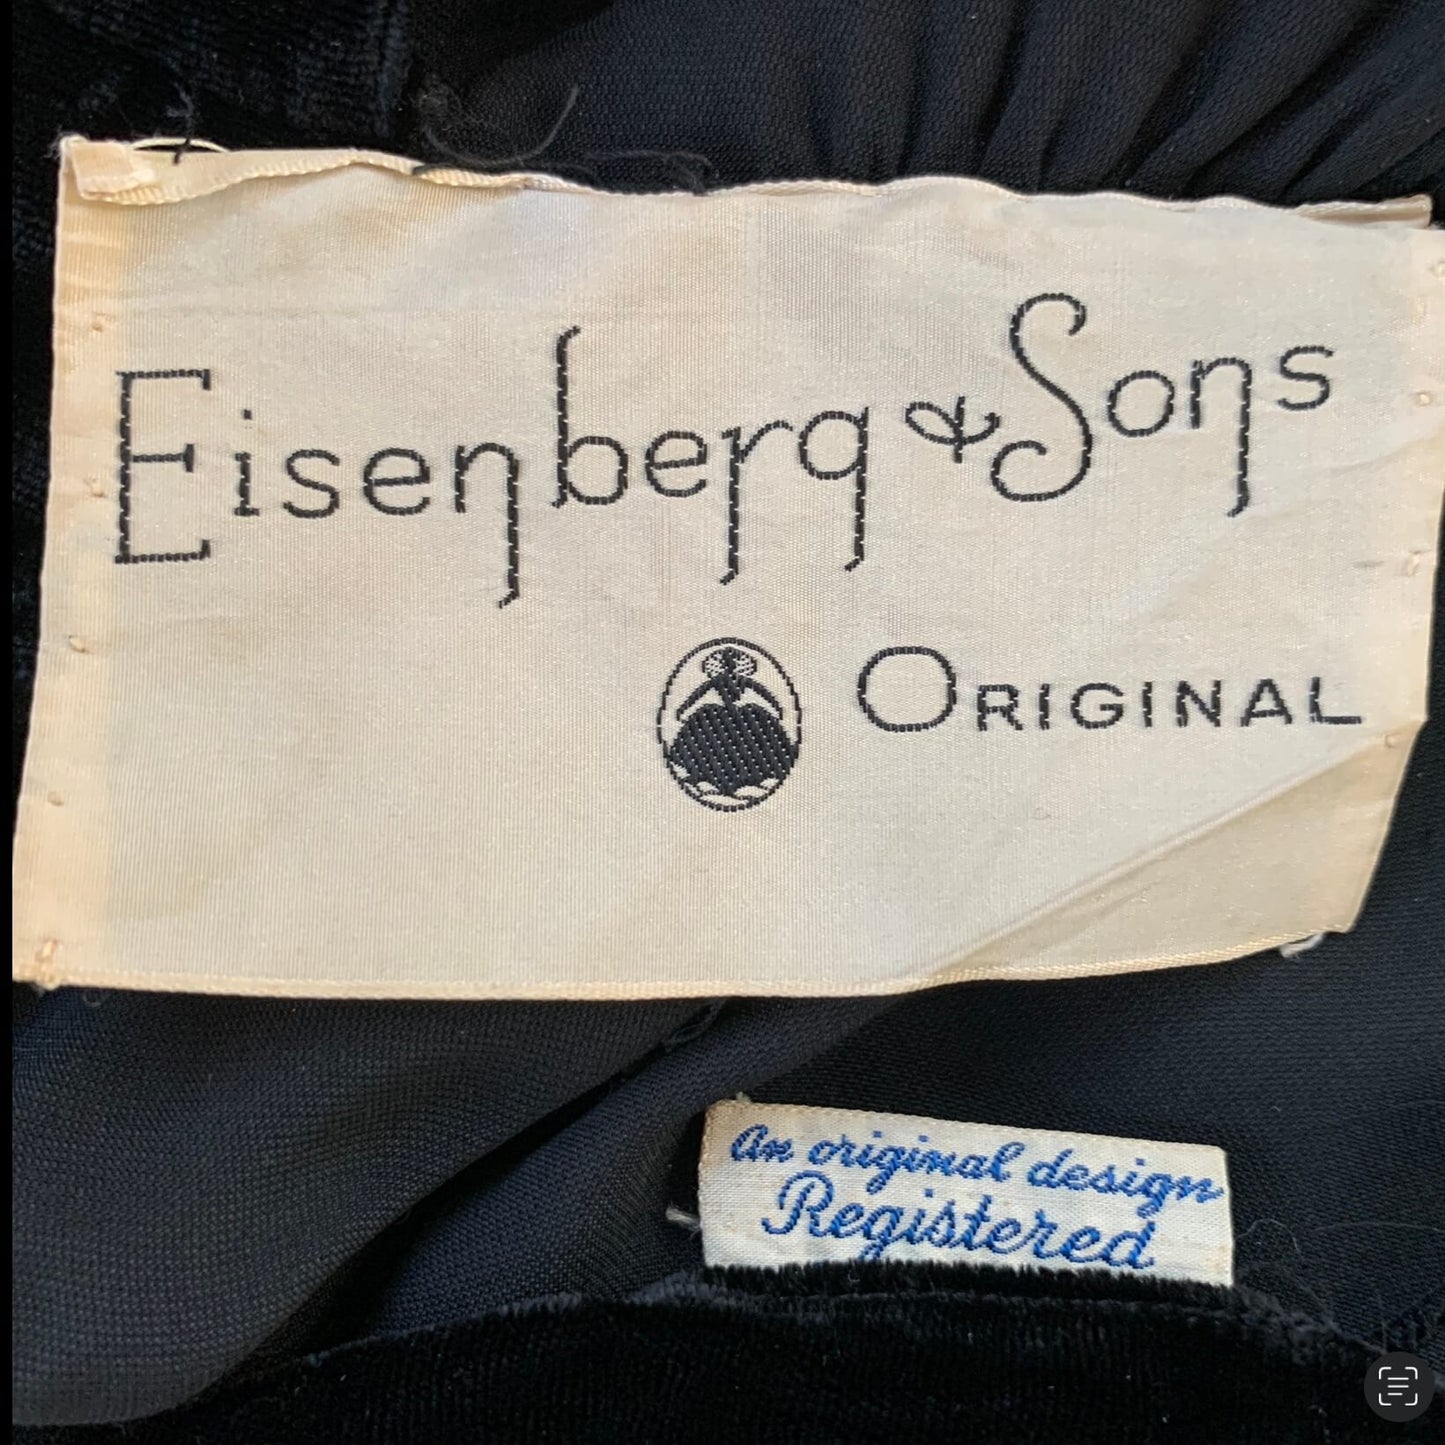 Eisenberg and sons original label